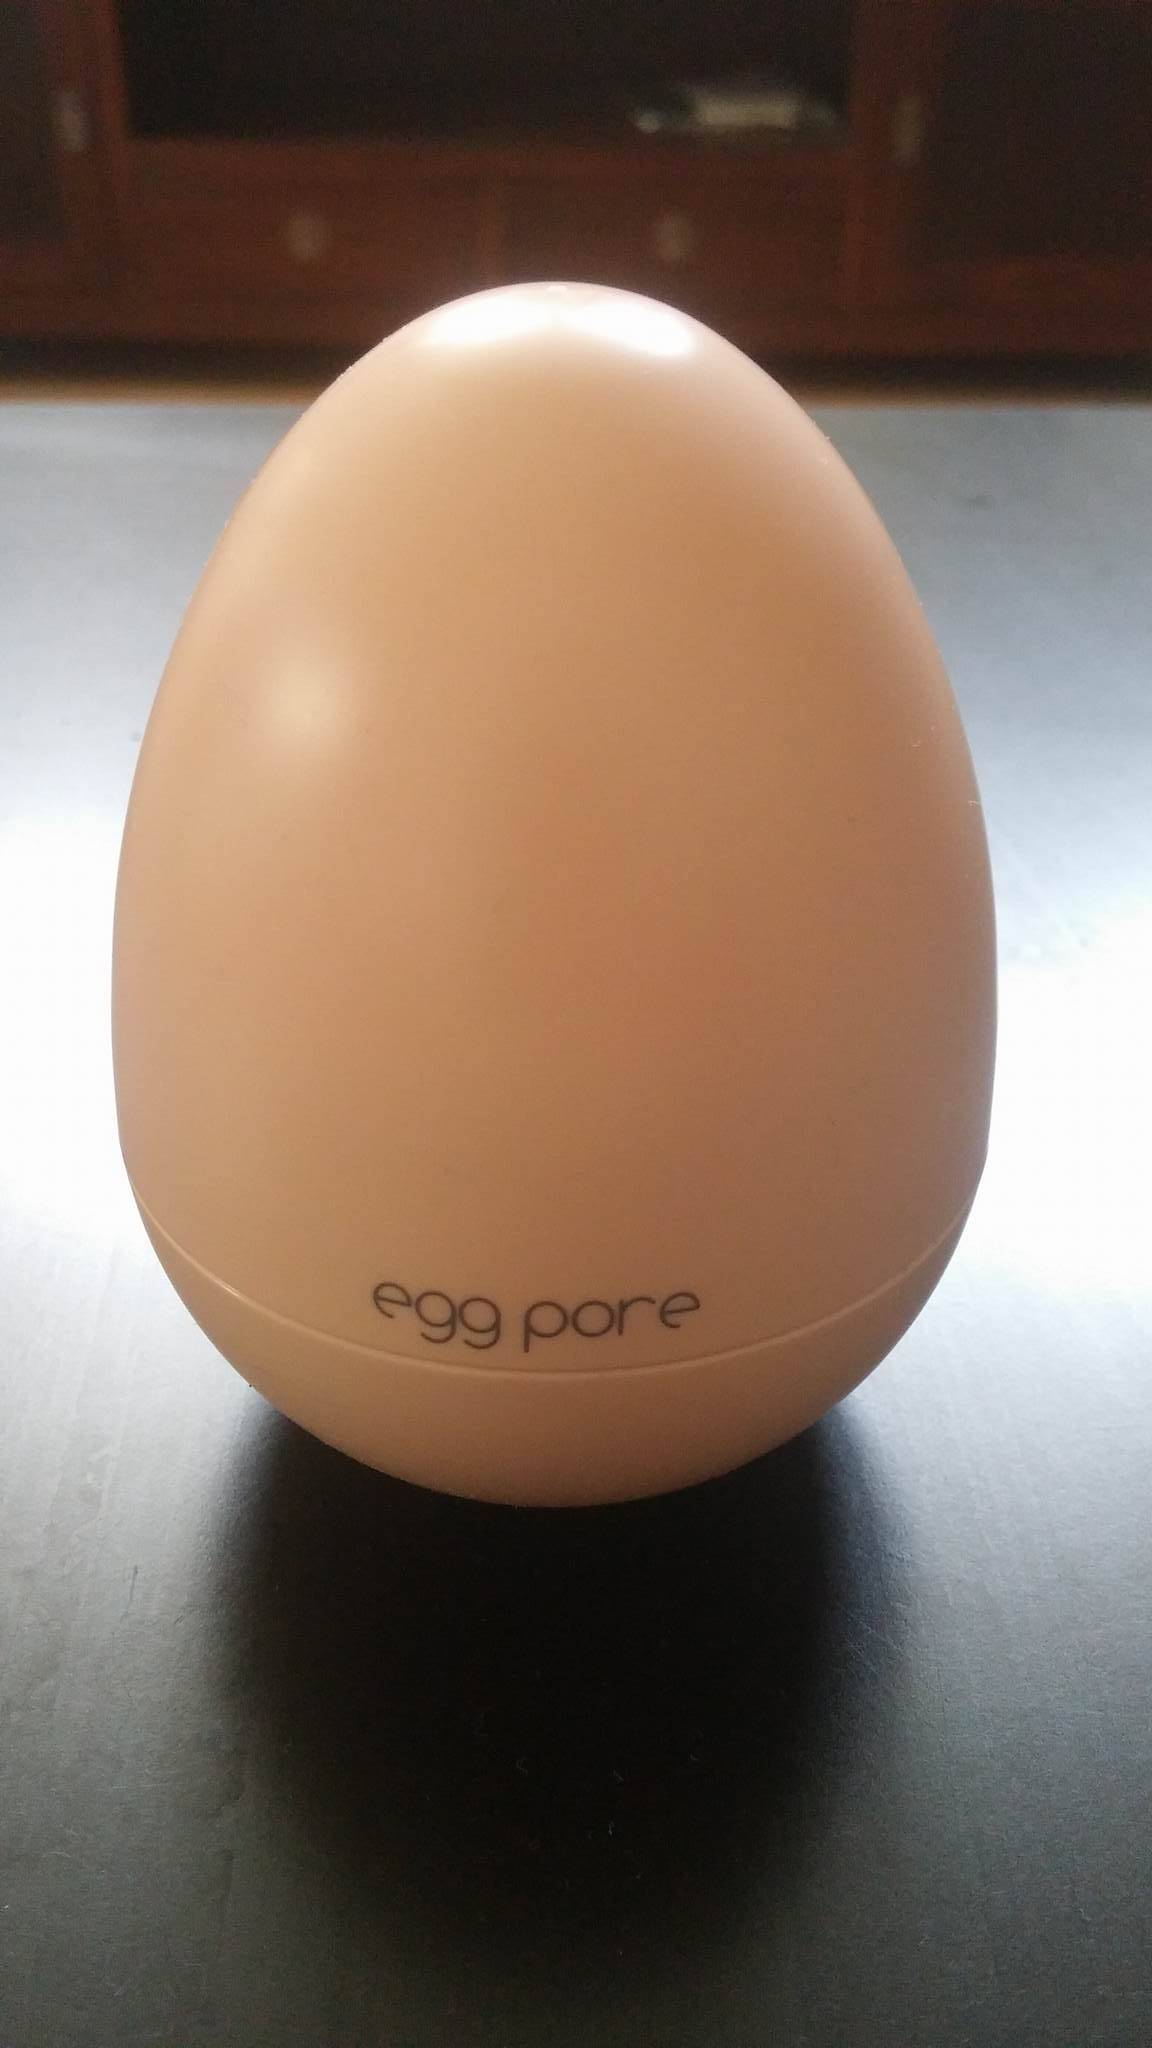 egg pore tightening masque test beauté avis barbatrucs